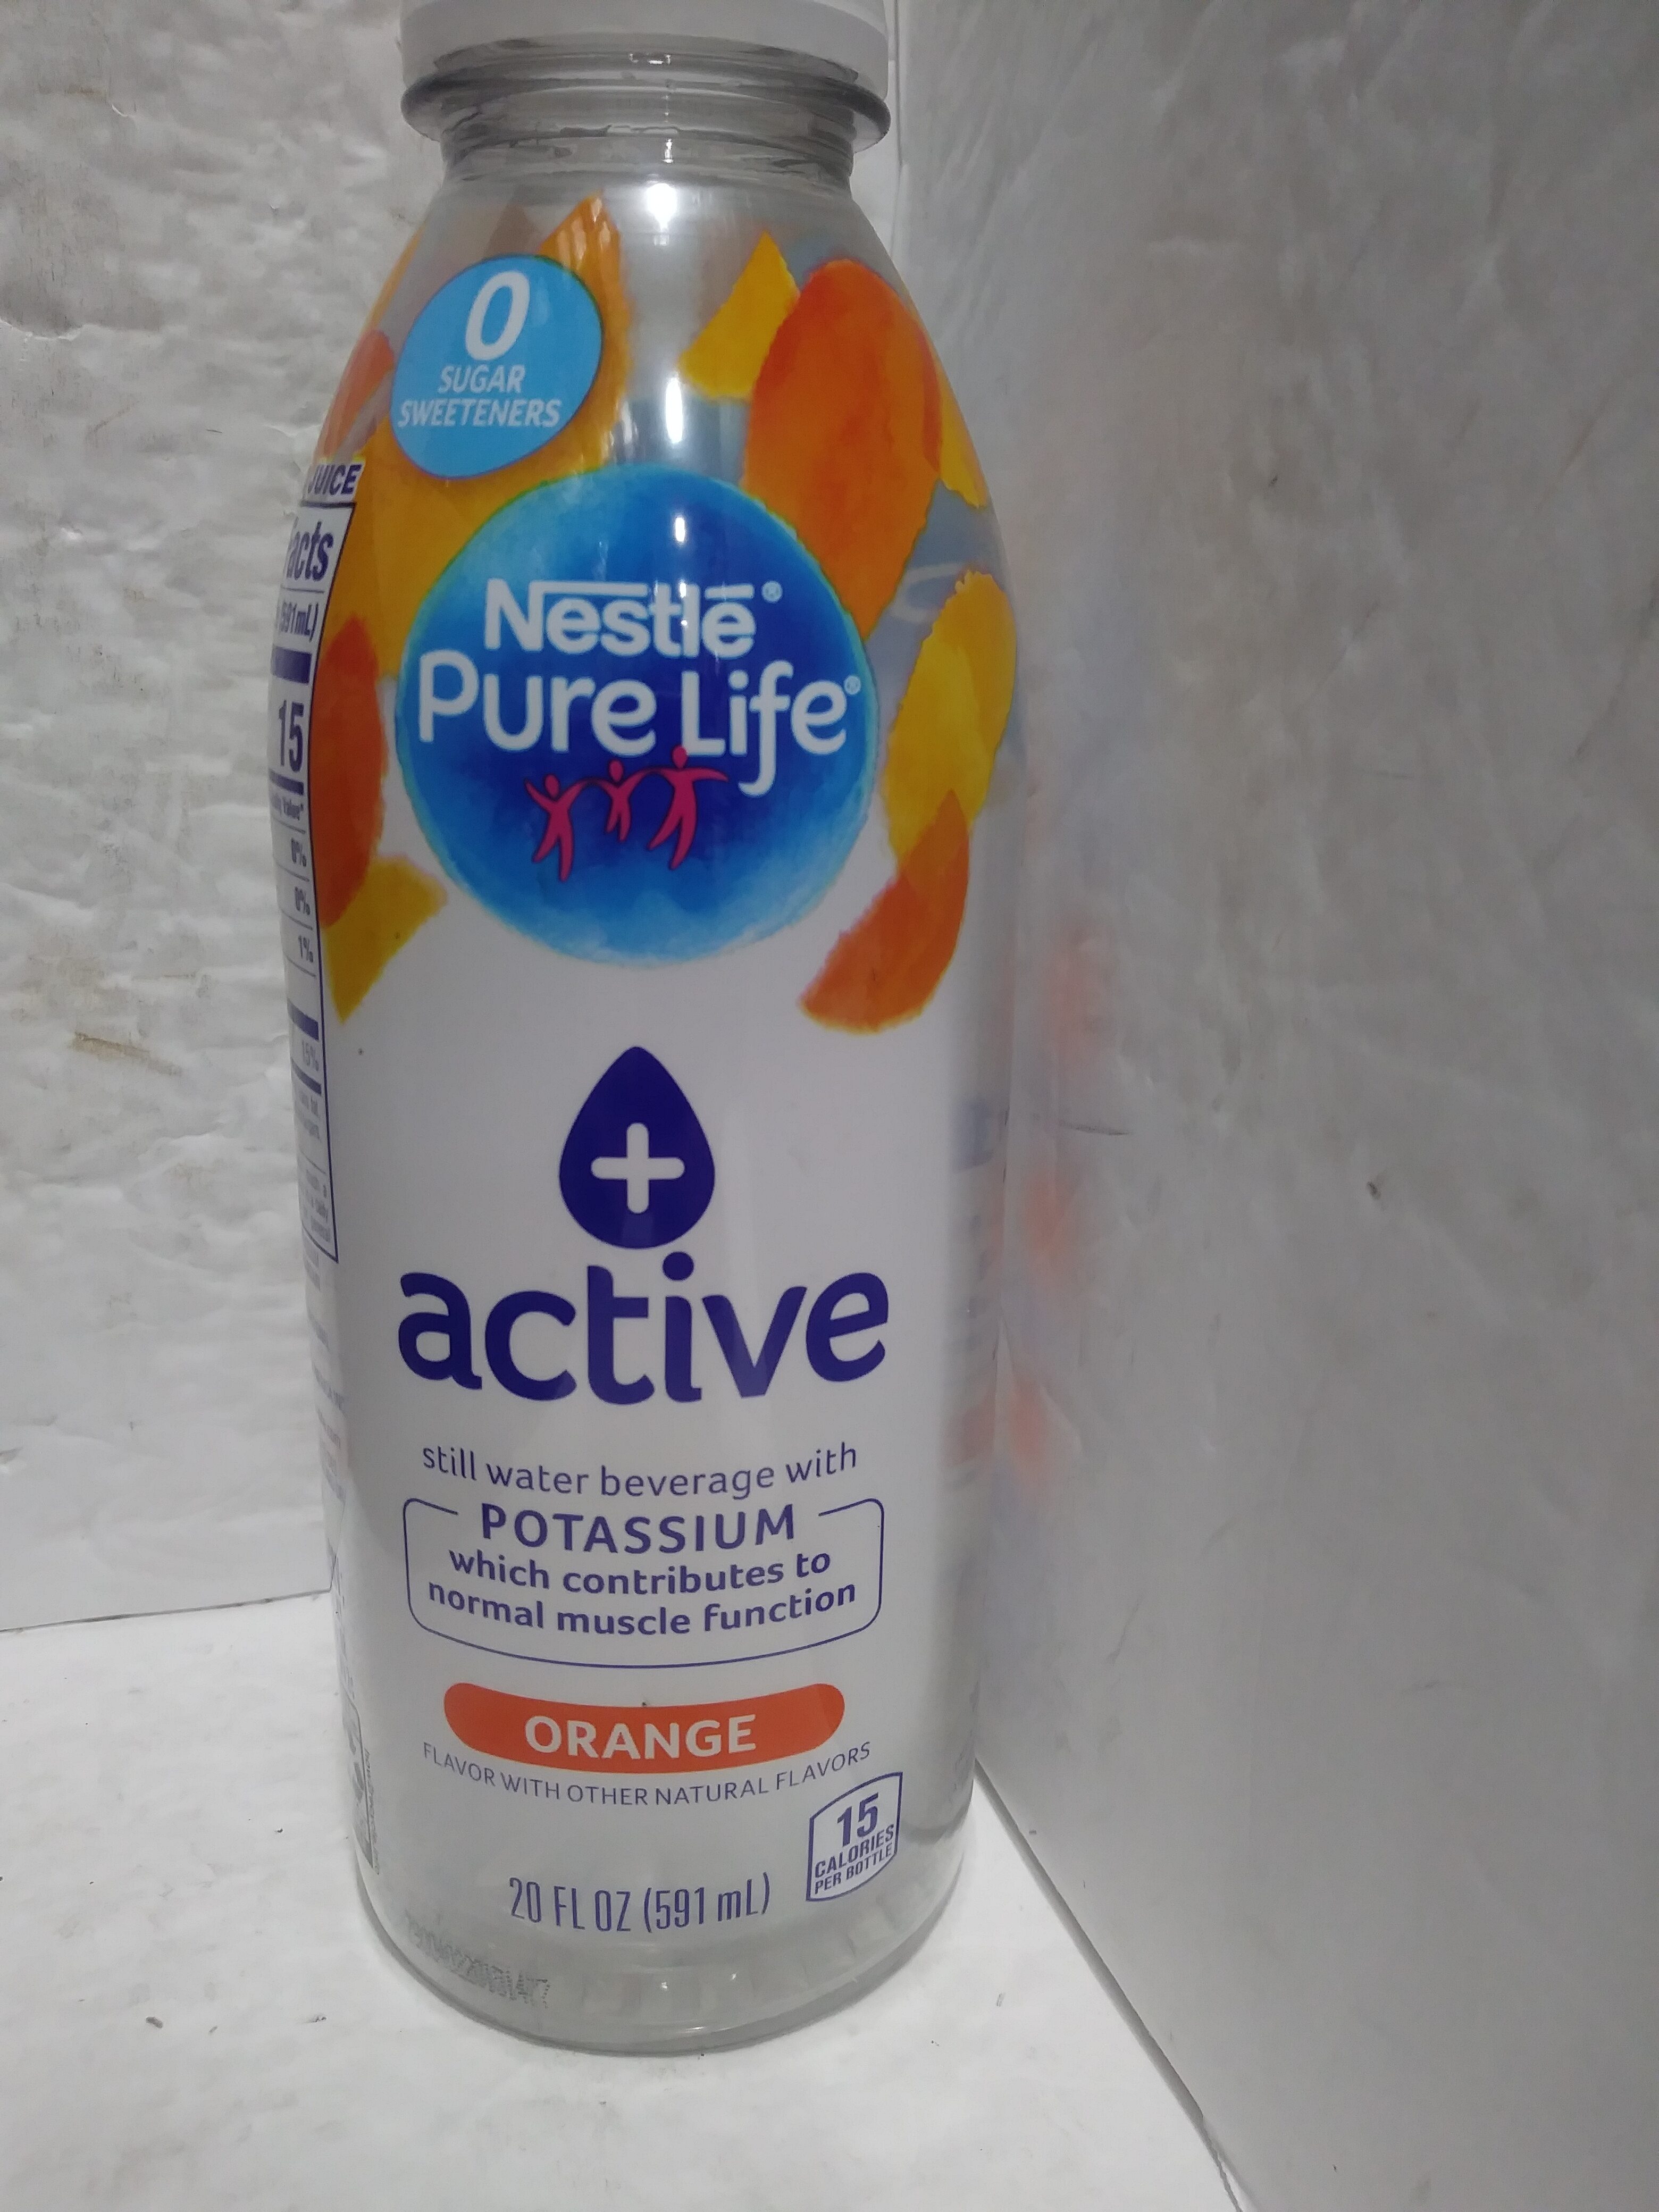 Still water Beverage with Potassium - Orange Flavored - Product